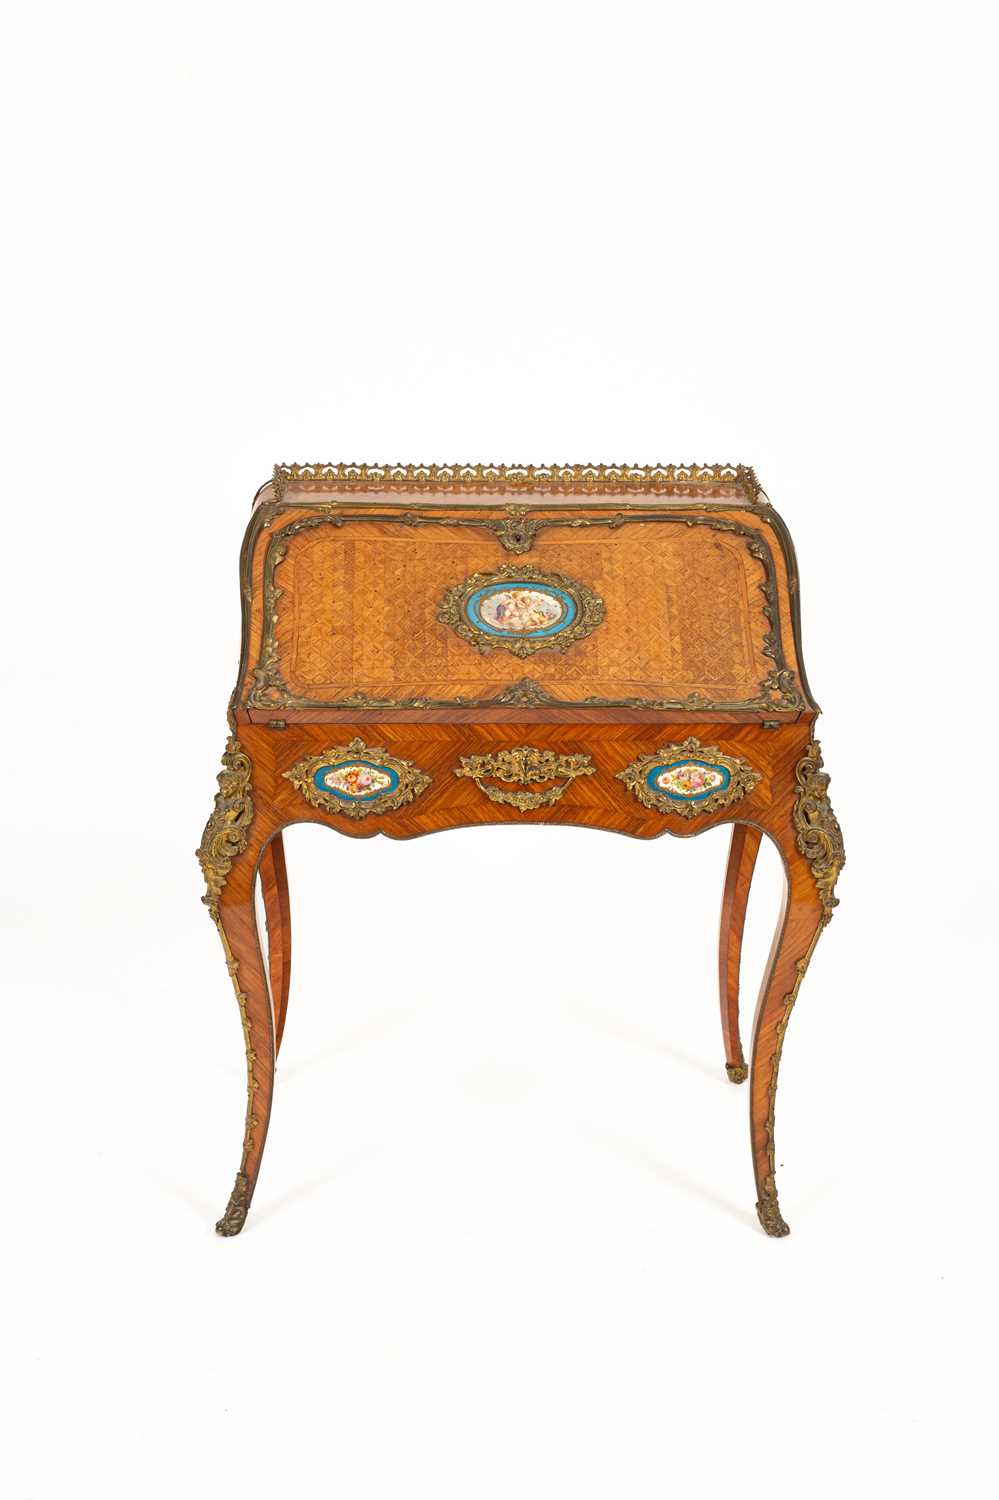 A Louis XV style ormolu mounted kingwood bureau de dame - Image 2 of 20